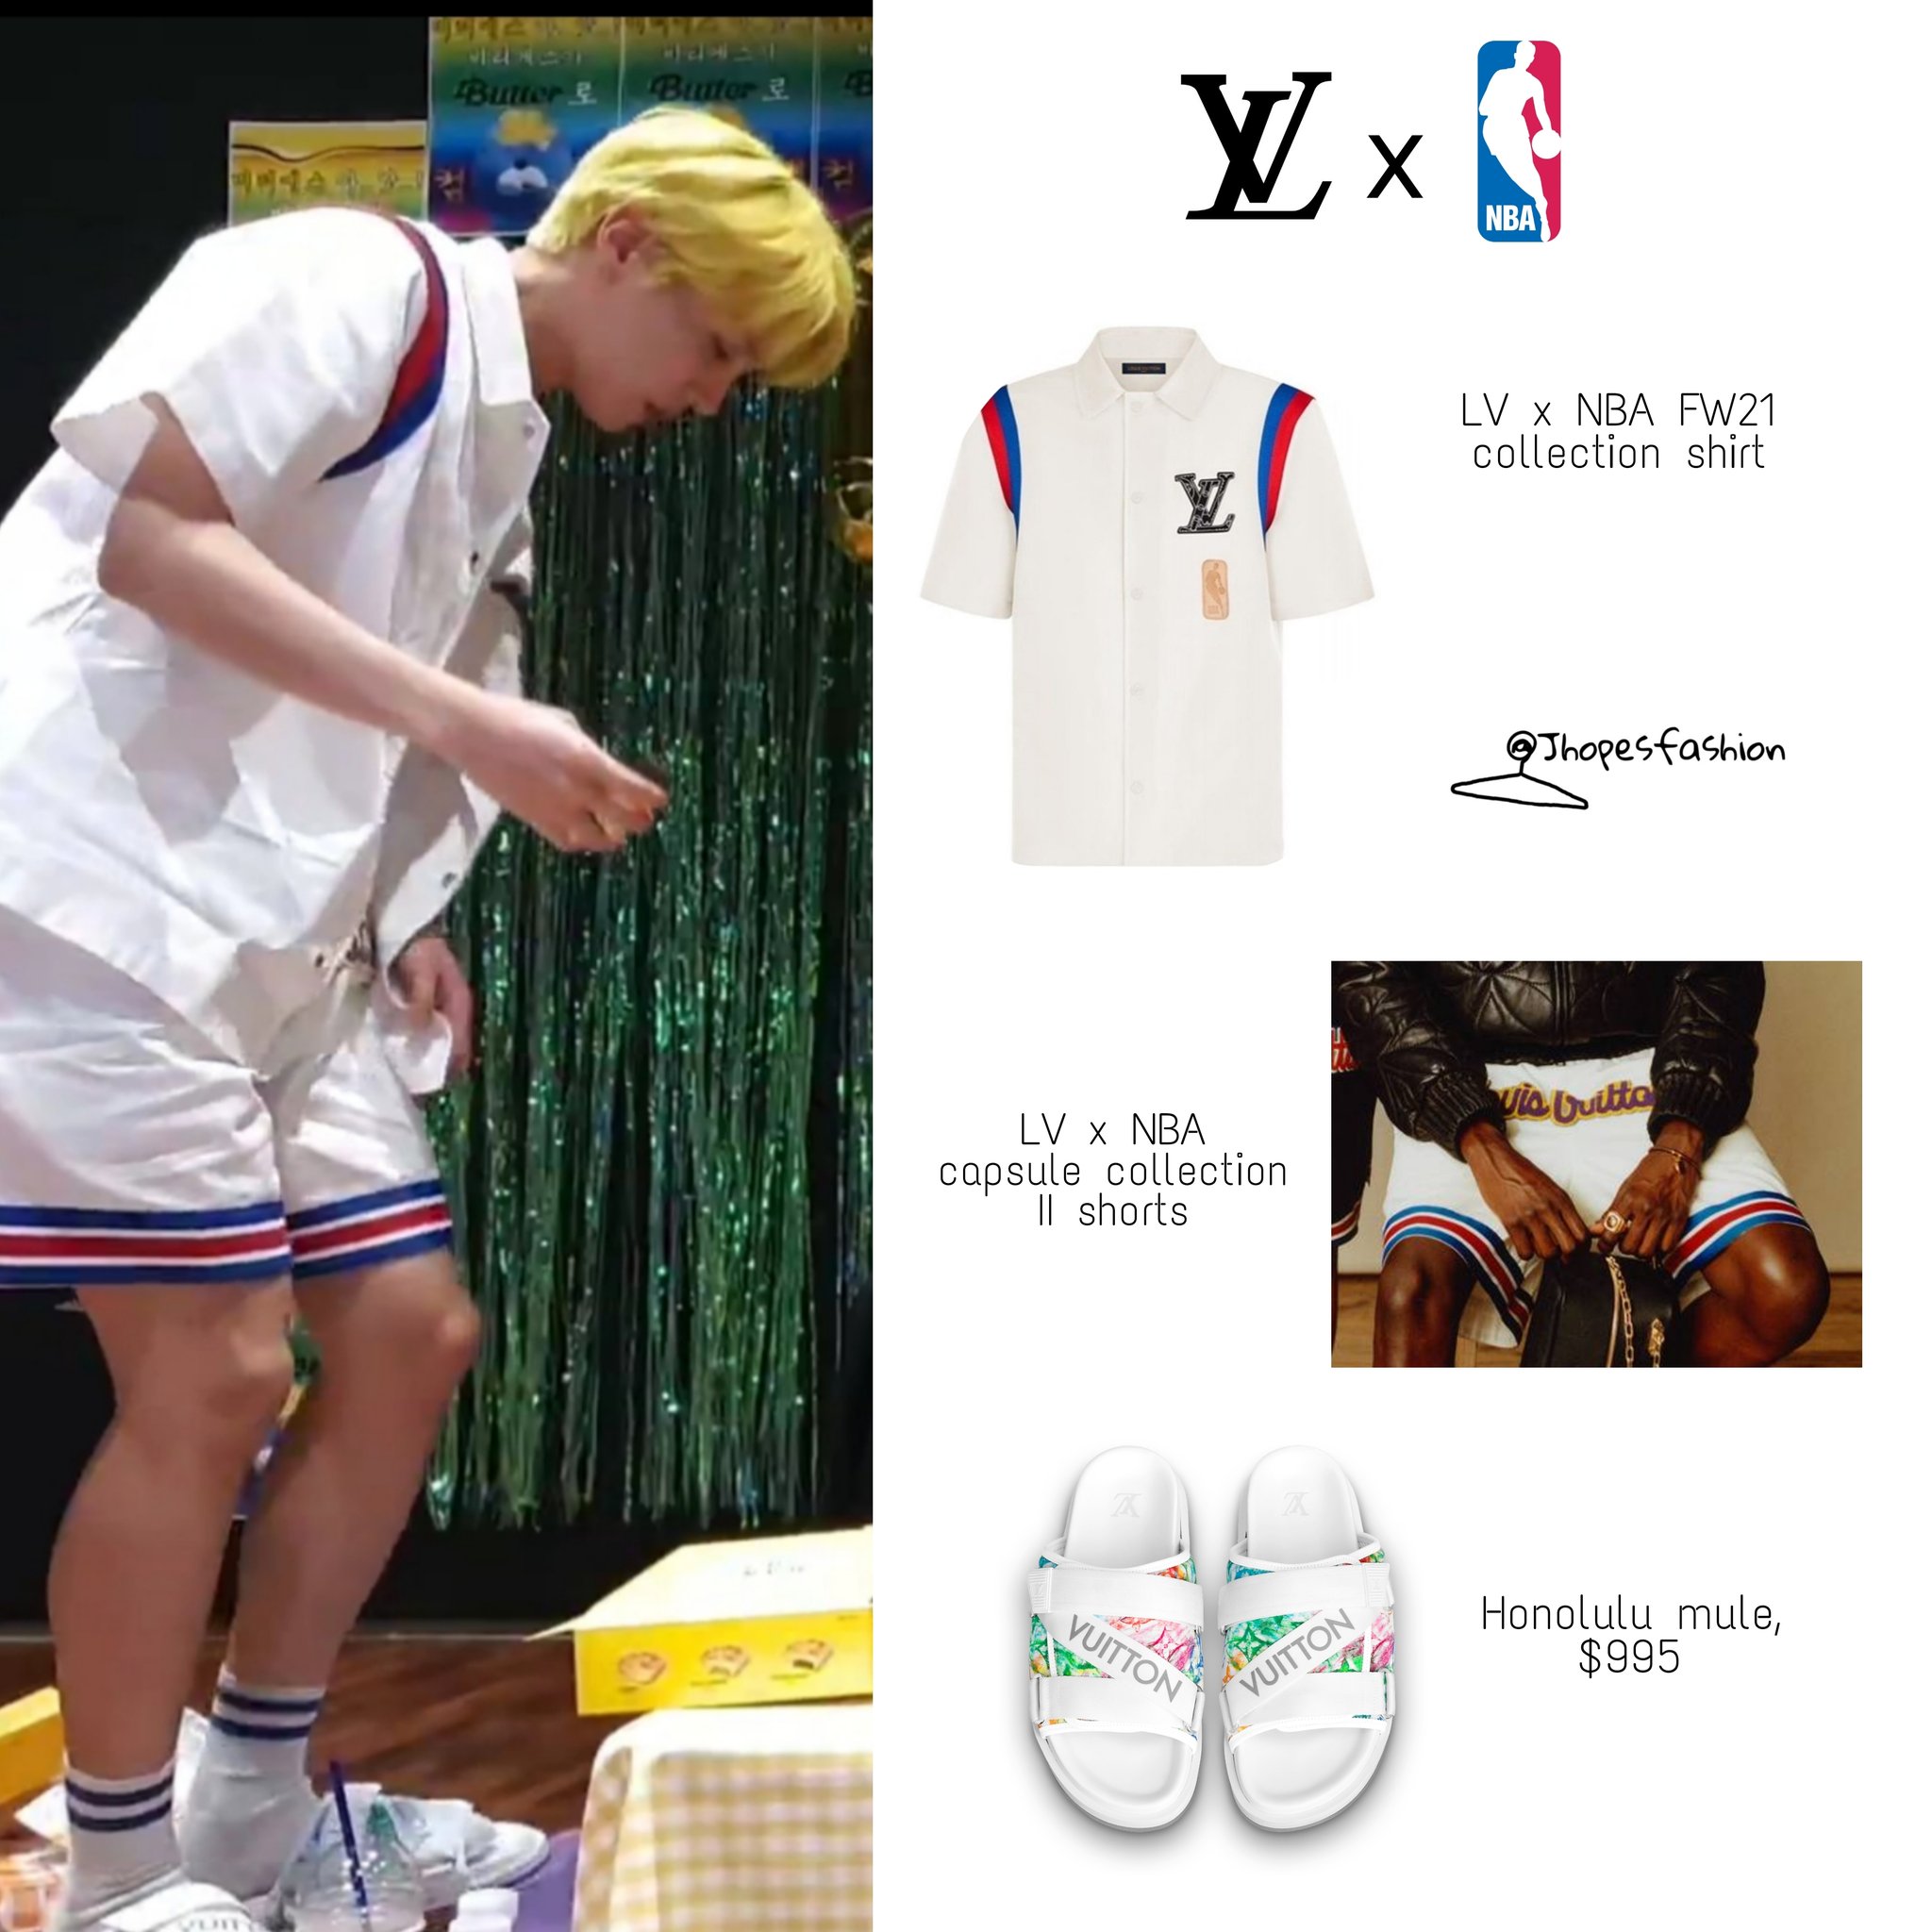 j-hope's closet (rest) on X: Hoseok's LV x NBA shirt & shorts